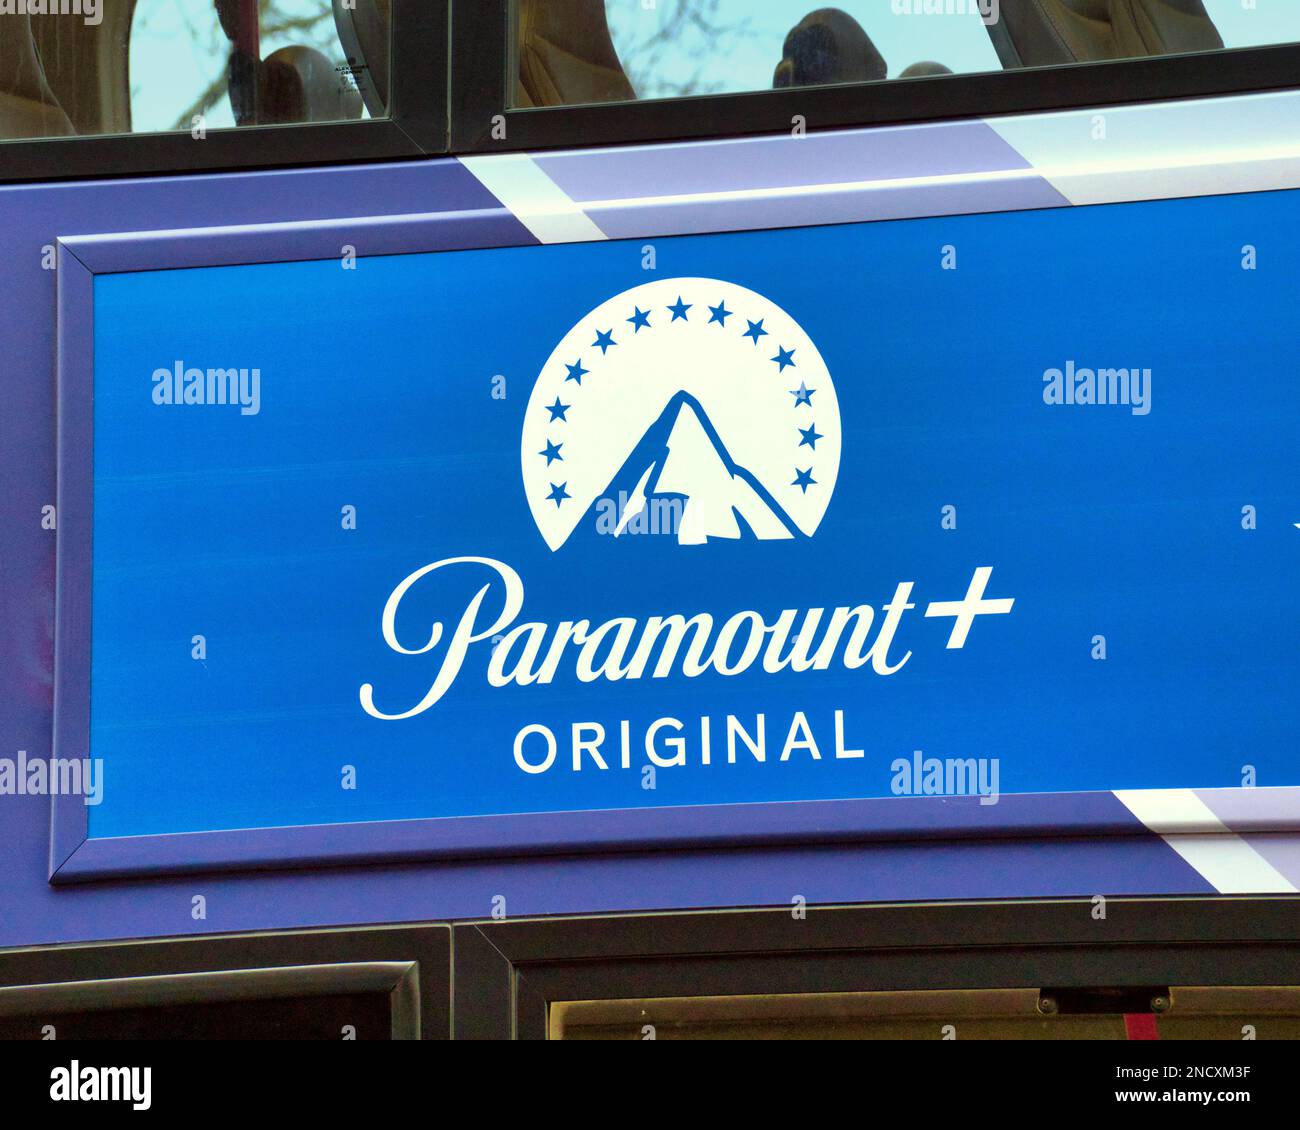 Paramount PLUS + Originalwerbung im Bus Stockfoto